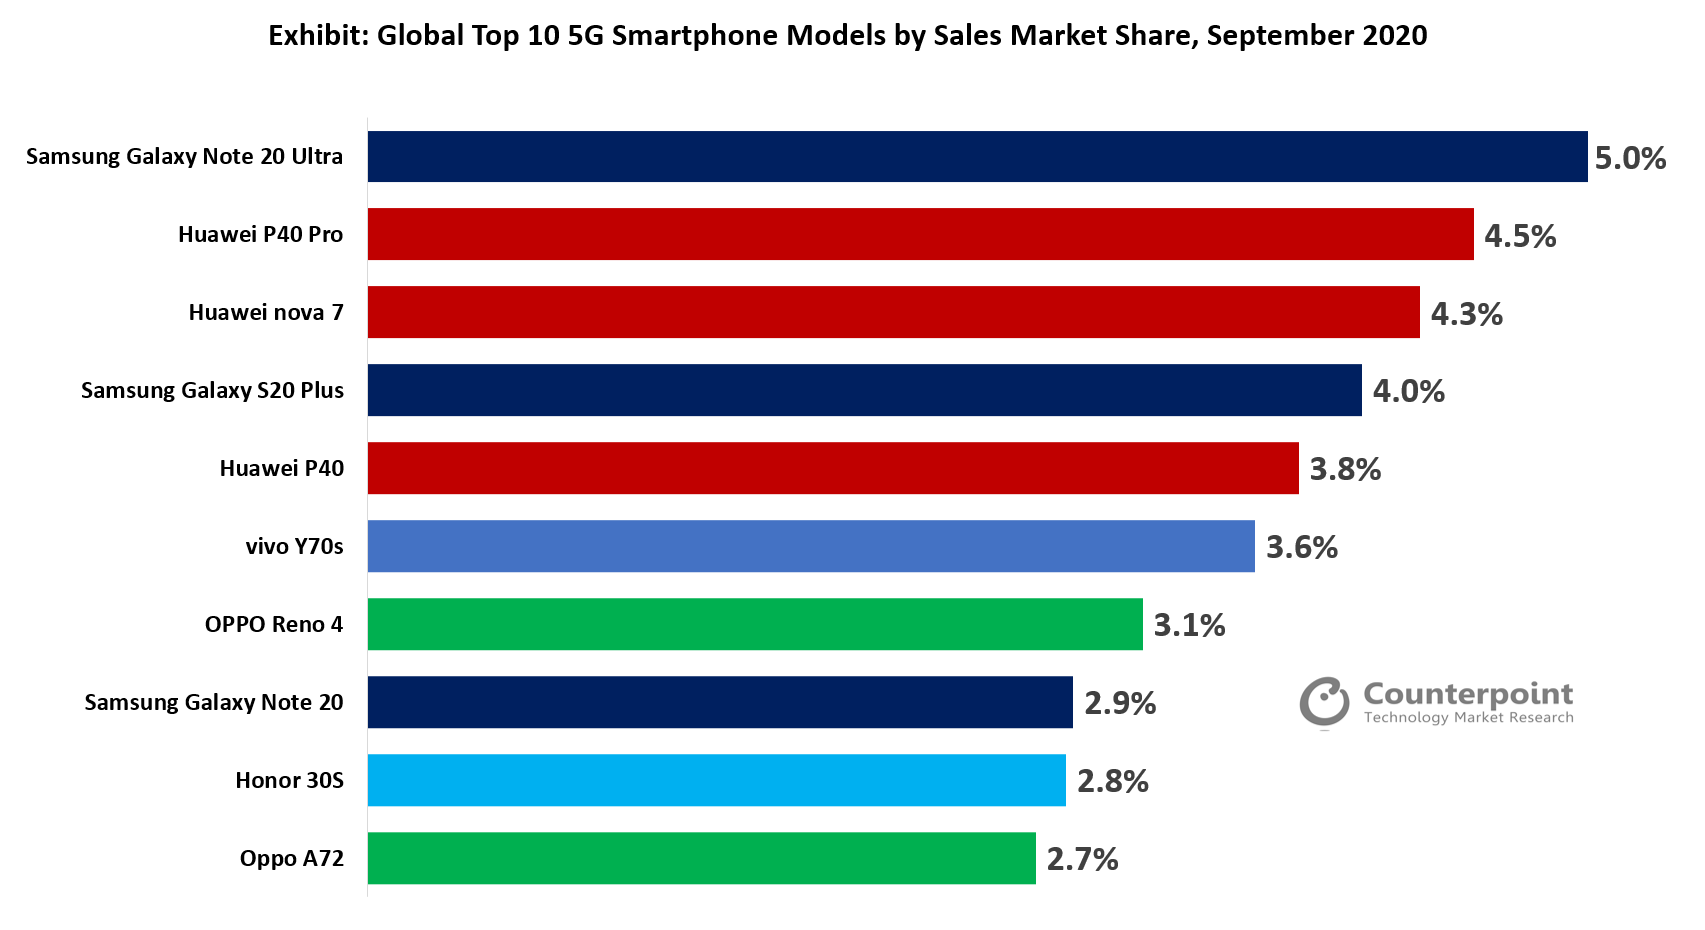 Counterpoint - 2020年9月按销售市场份额划分的全球十大5G智能手机型号